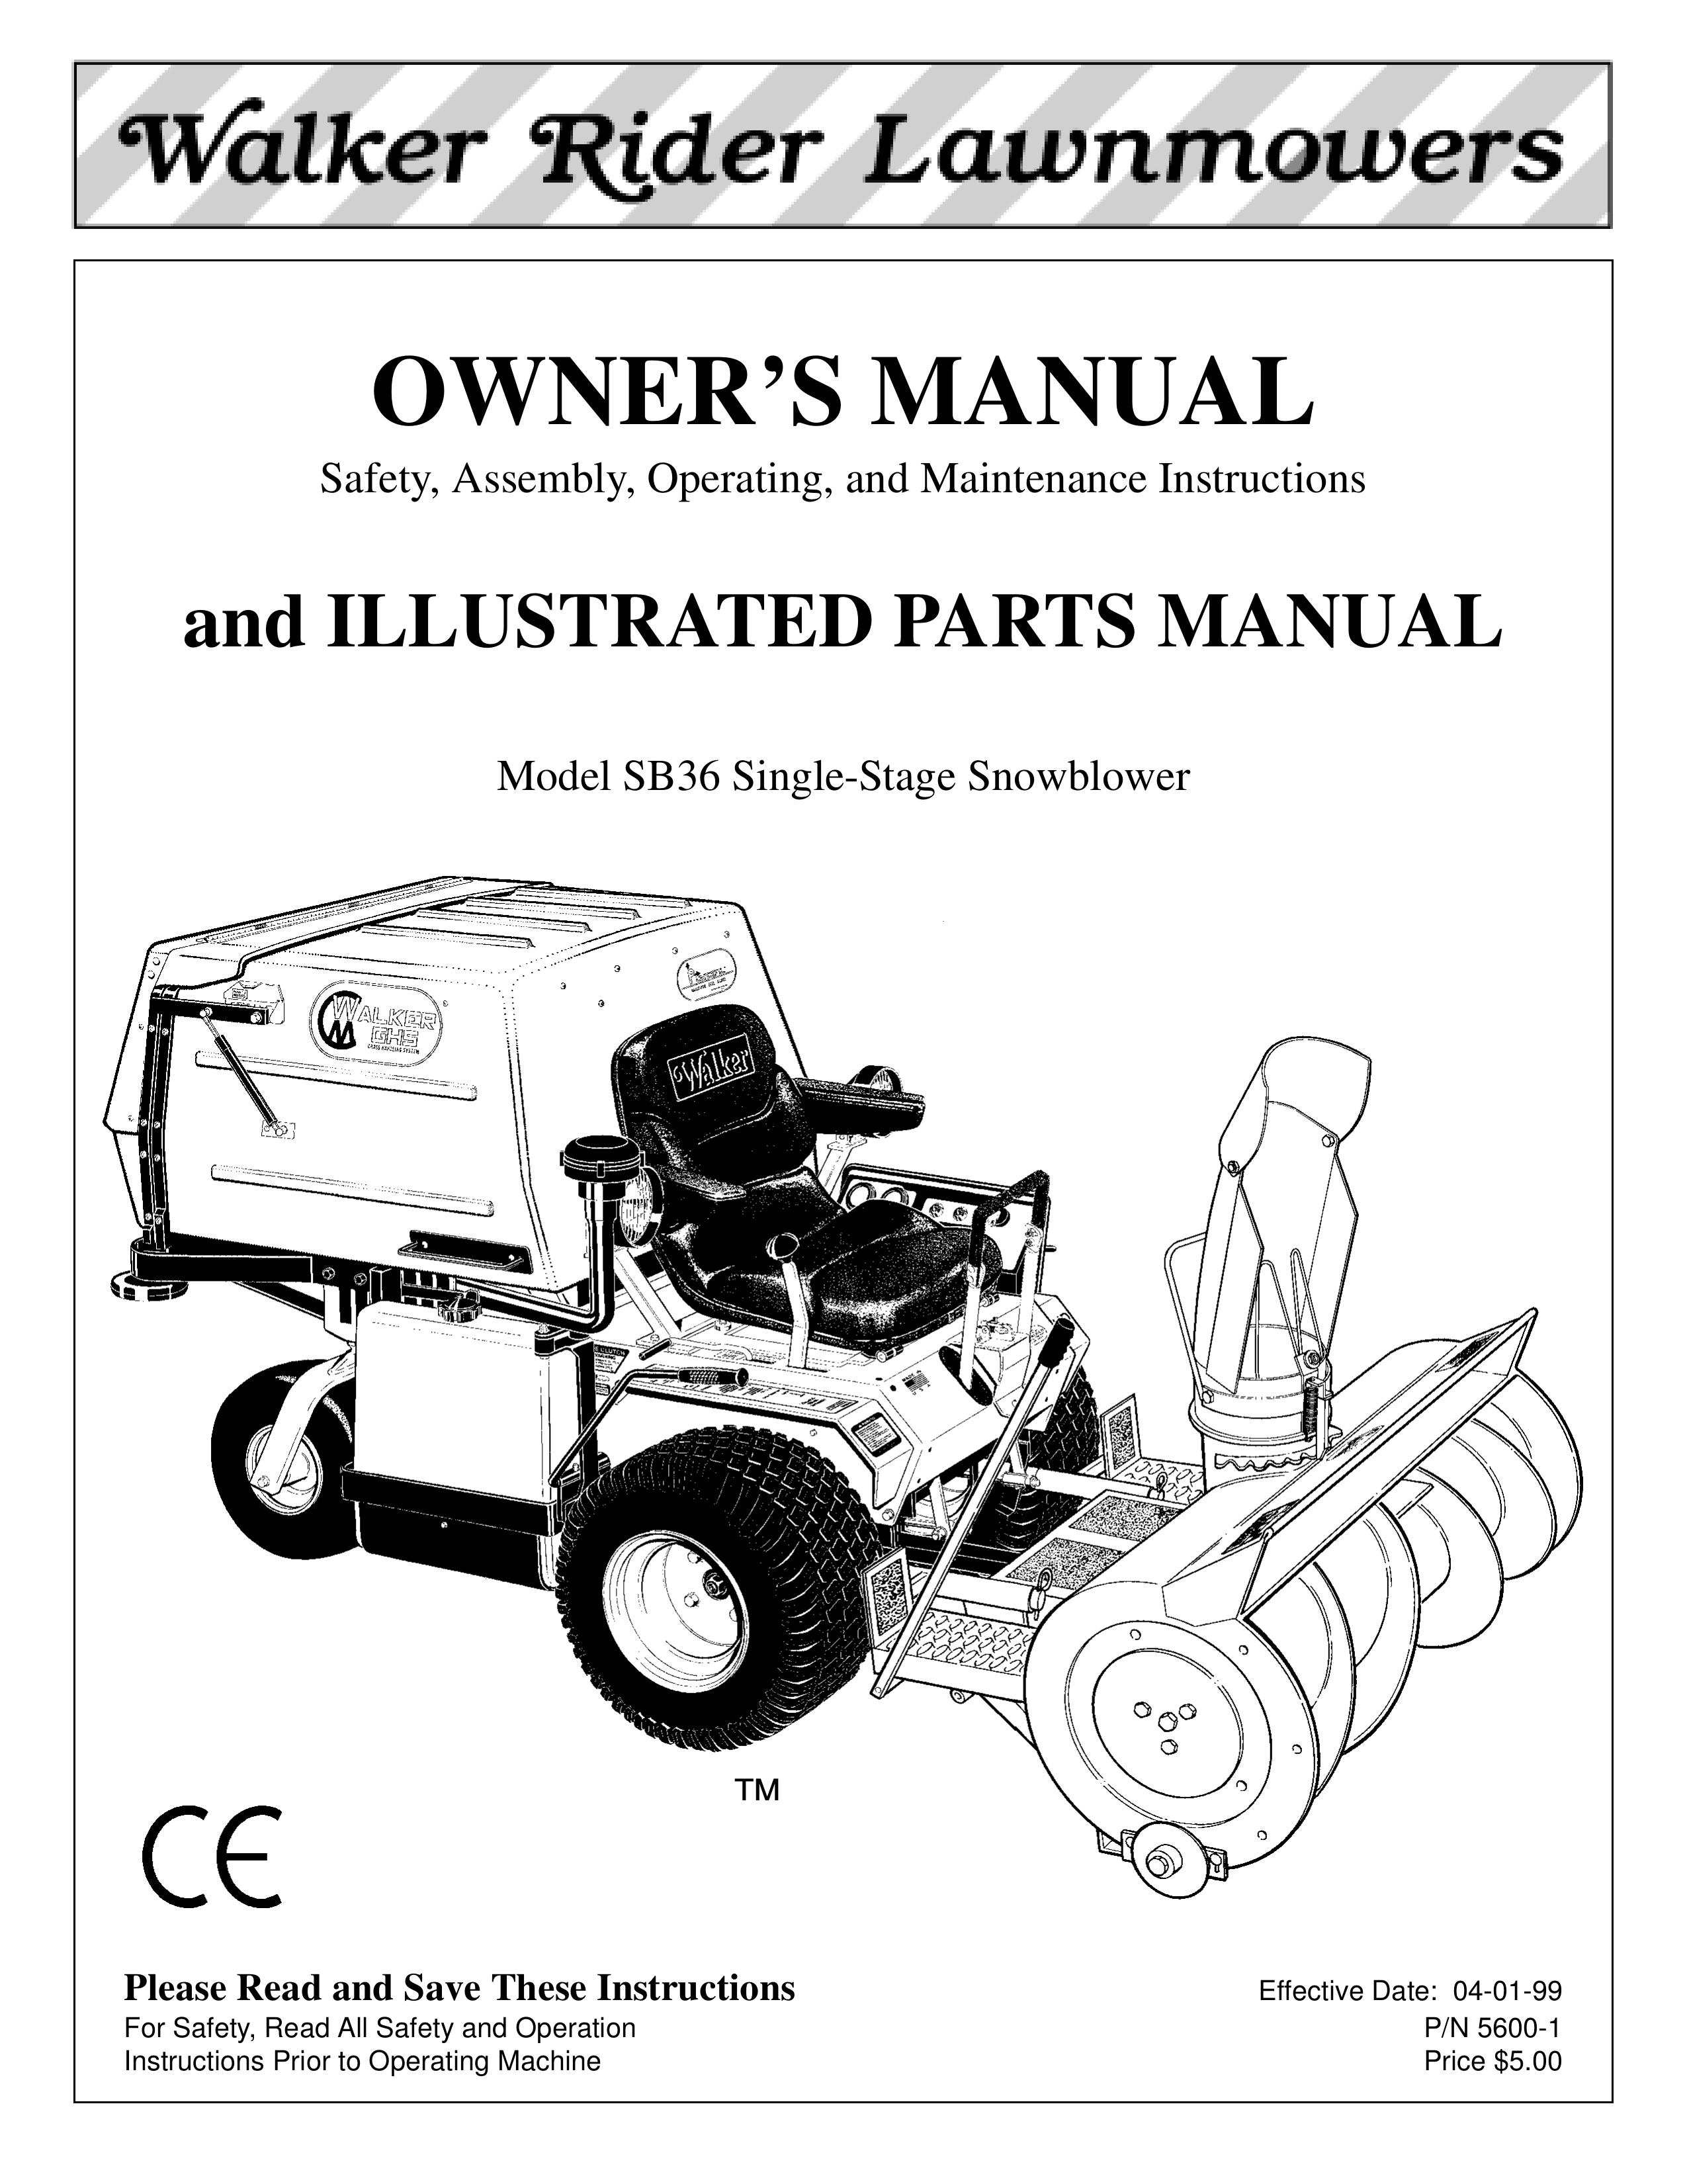 Walker SB36 Snow Blower User Manual